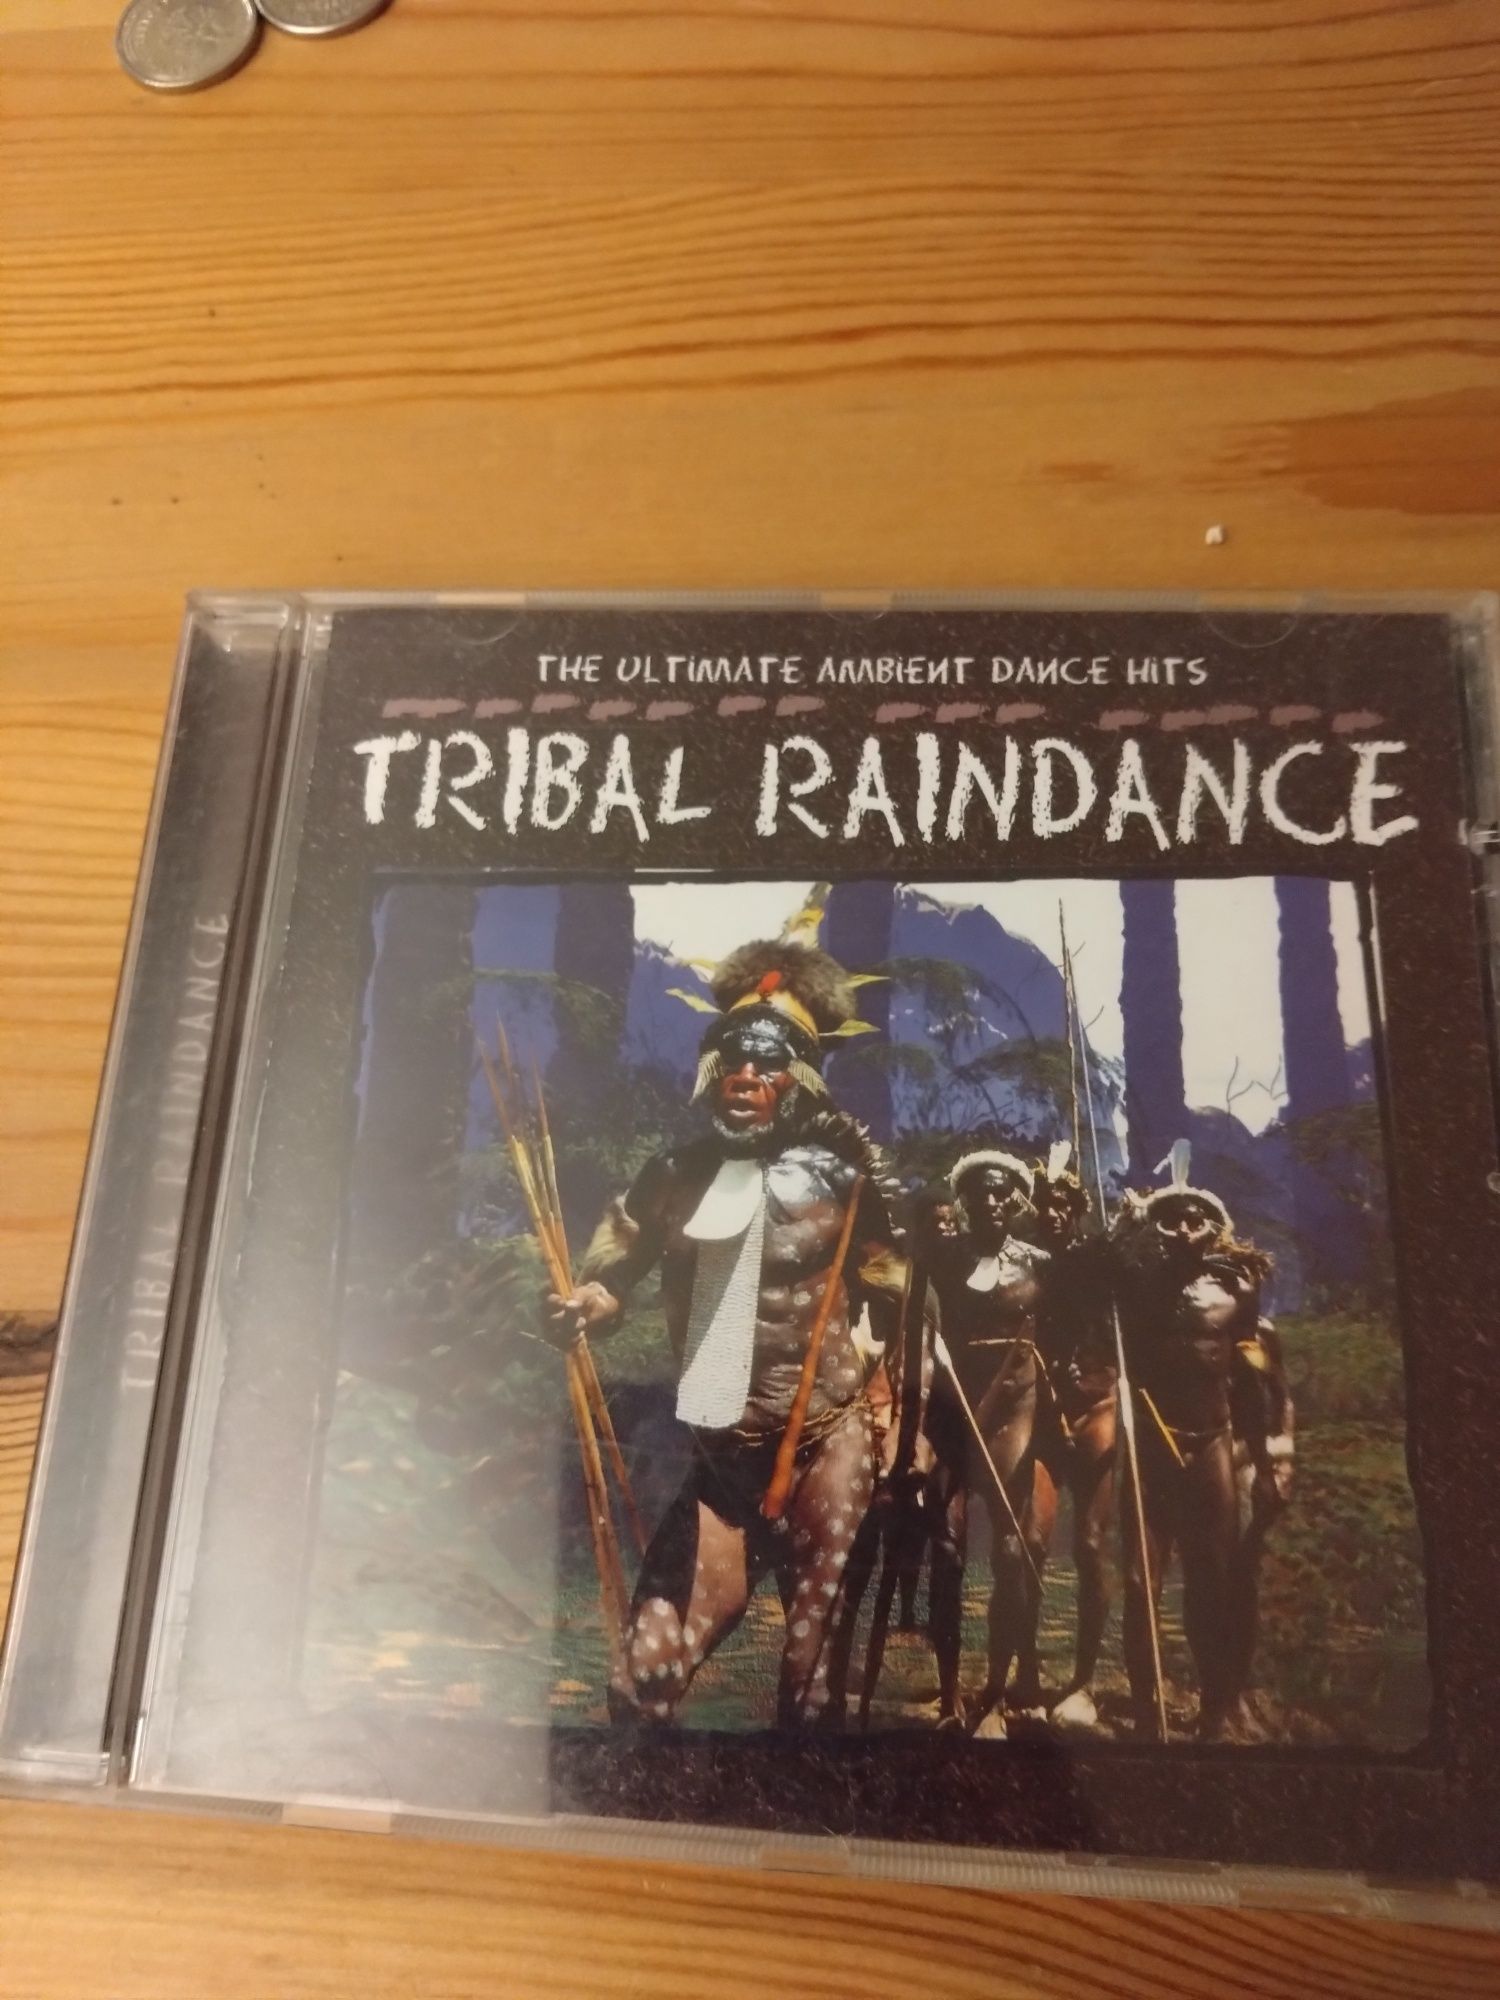 Tribal raindance